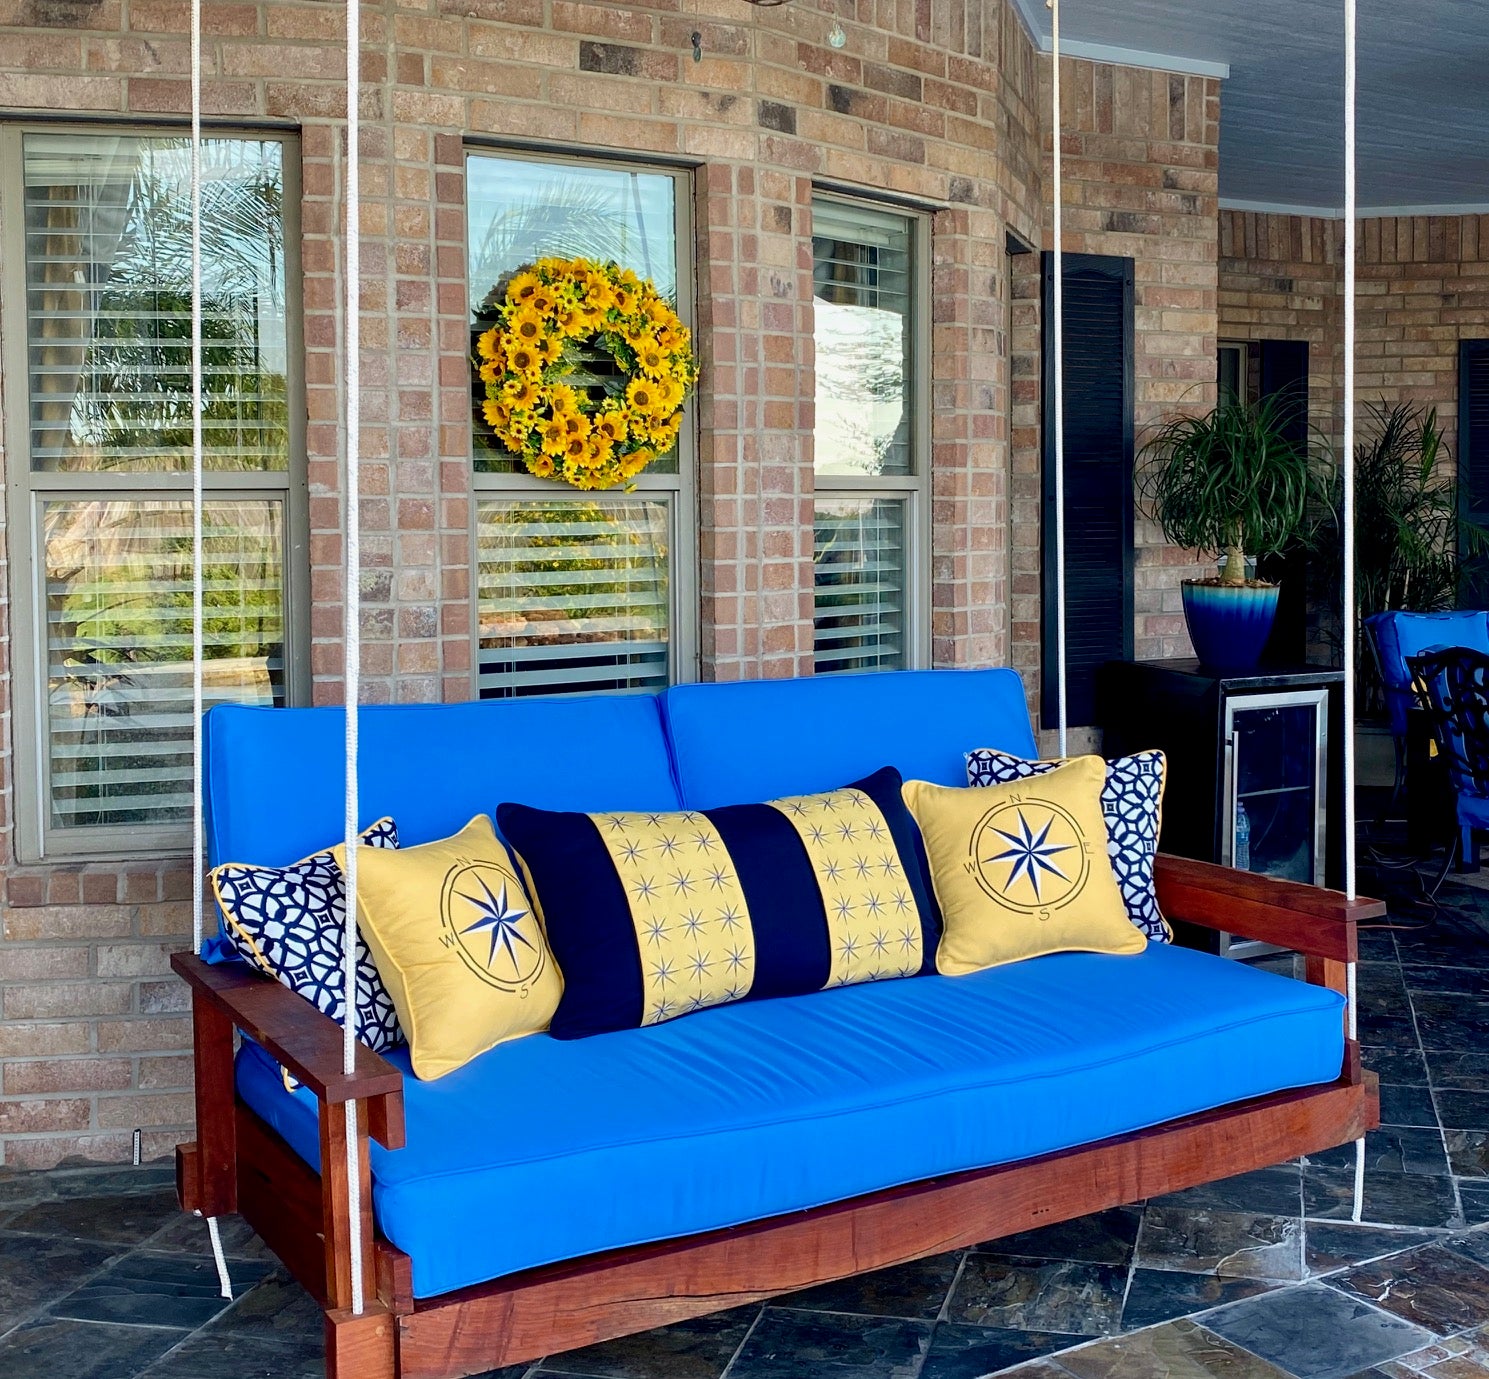 Sunbrella Outdoor Porch Swing Bed Cushion Sets